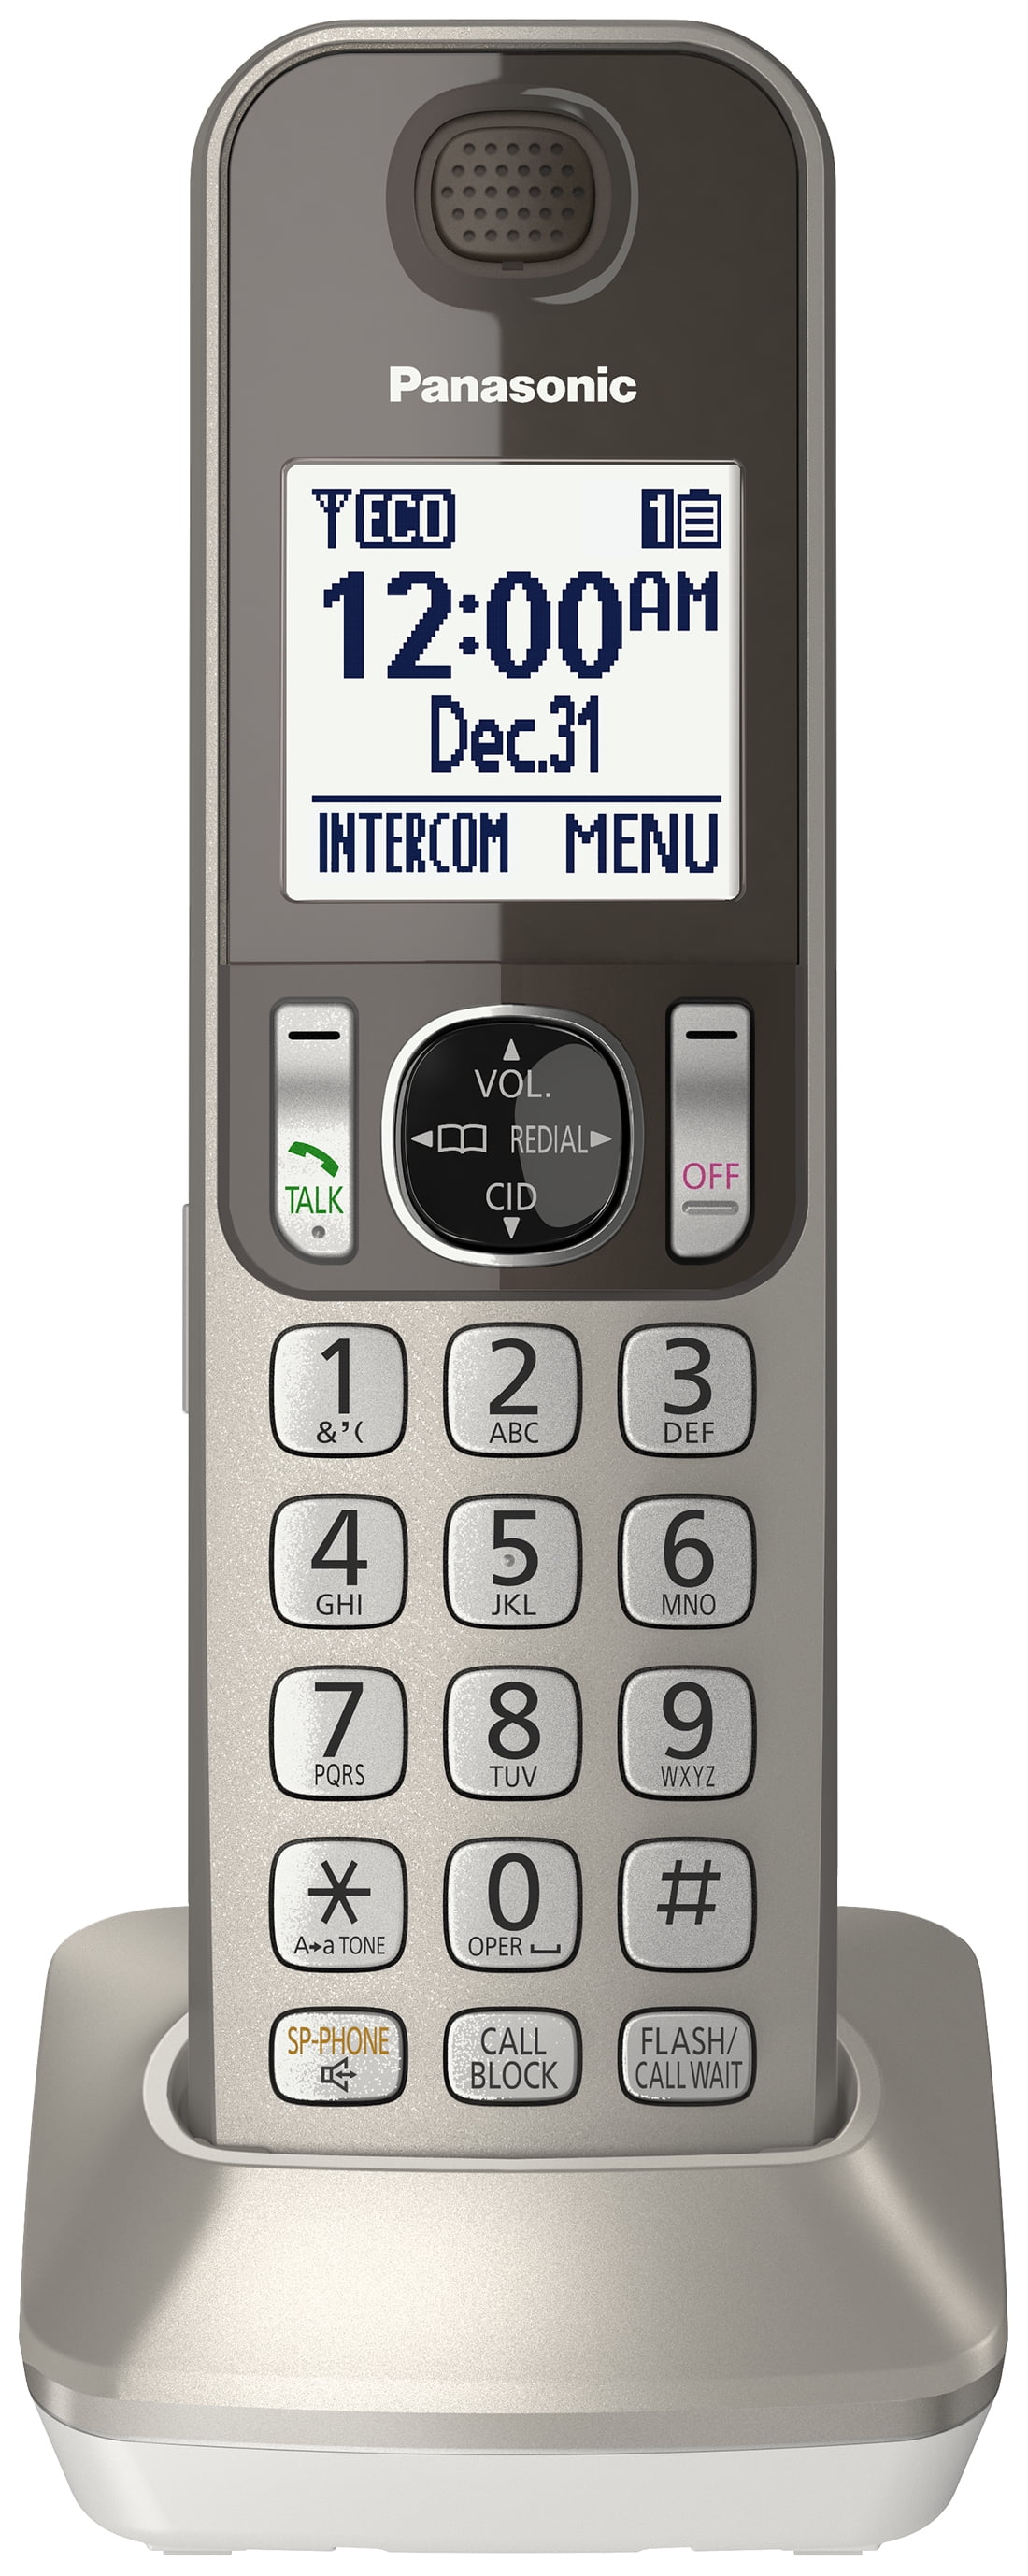 Panasonic KX-TGE445B Expandable Cordless Phone System with Answering Machine 